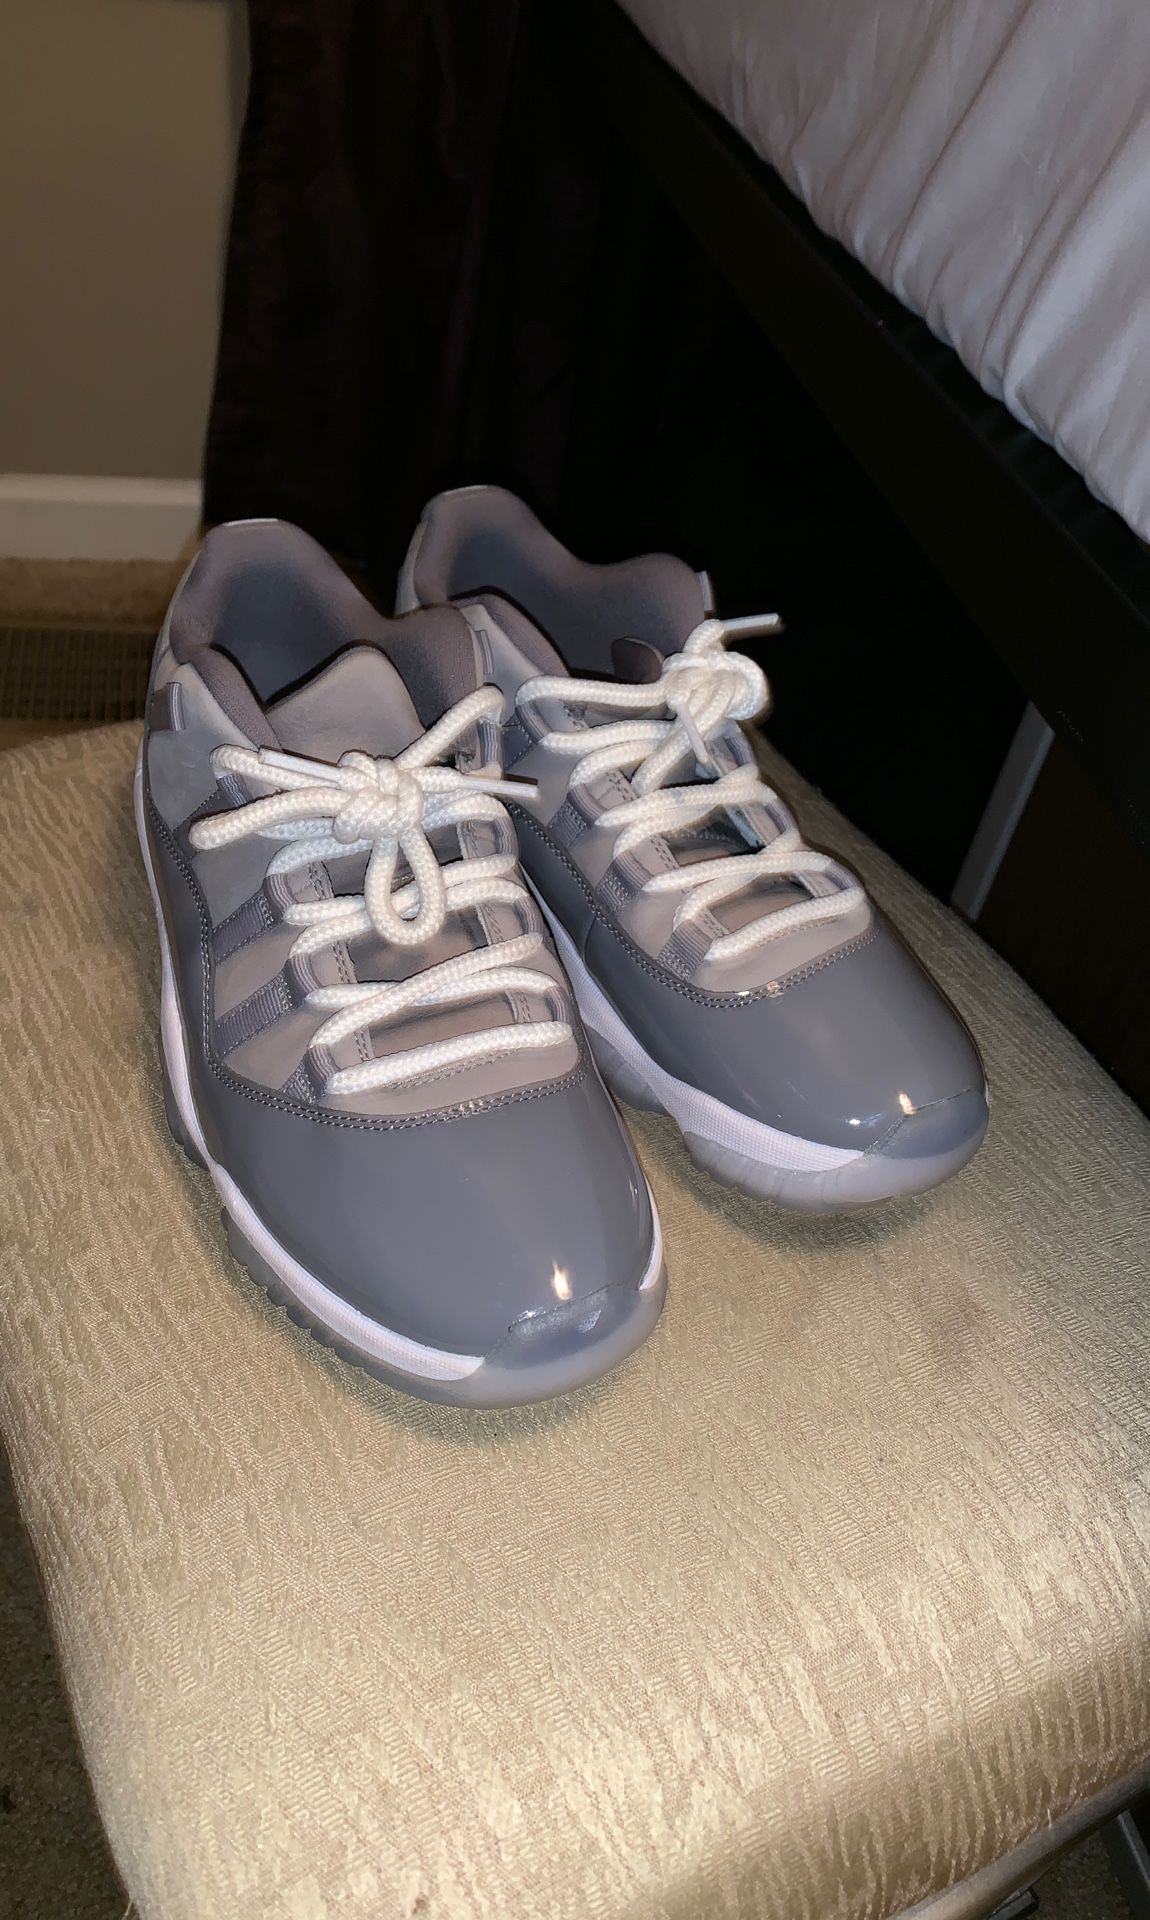 Retro Jordan shoes 11’s cool grey lows 9.5